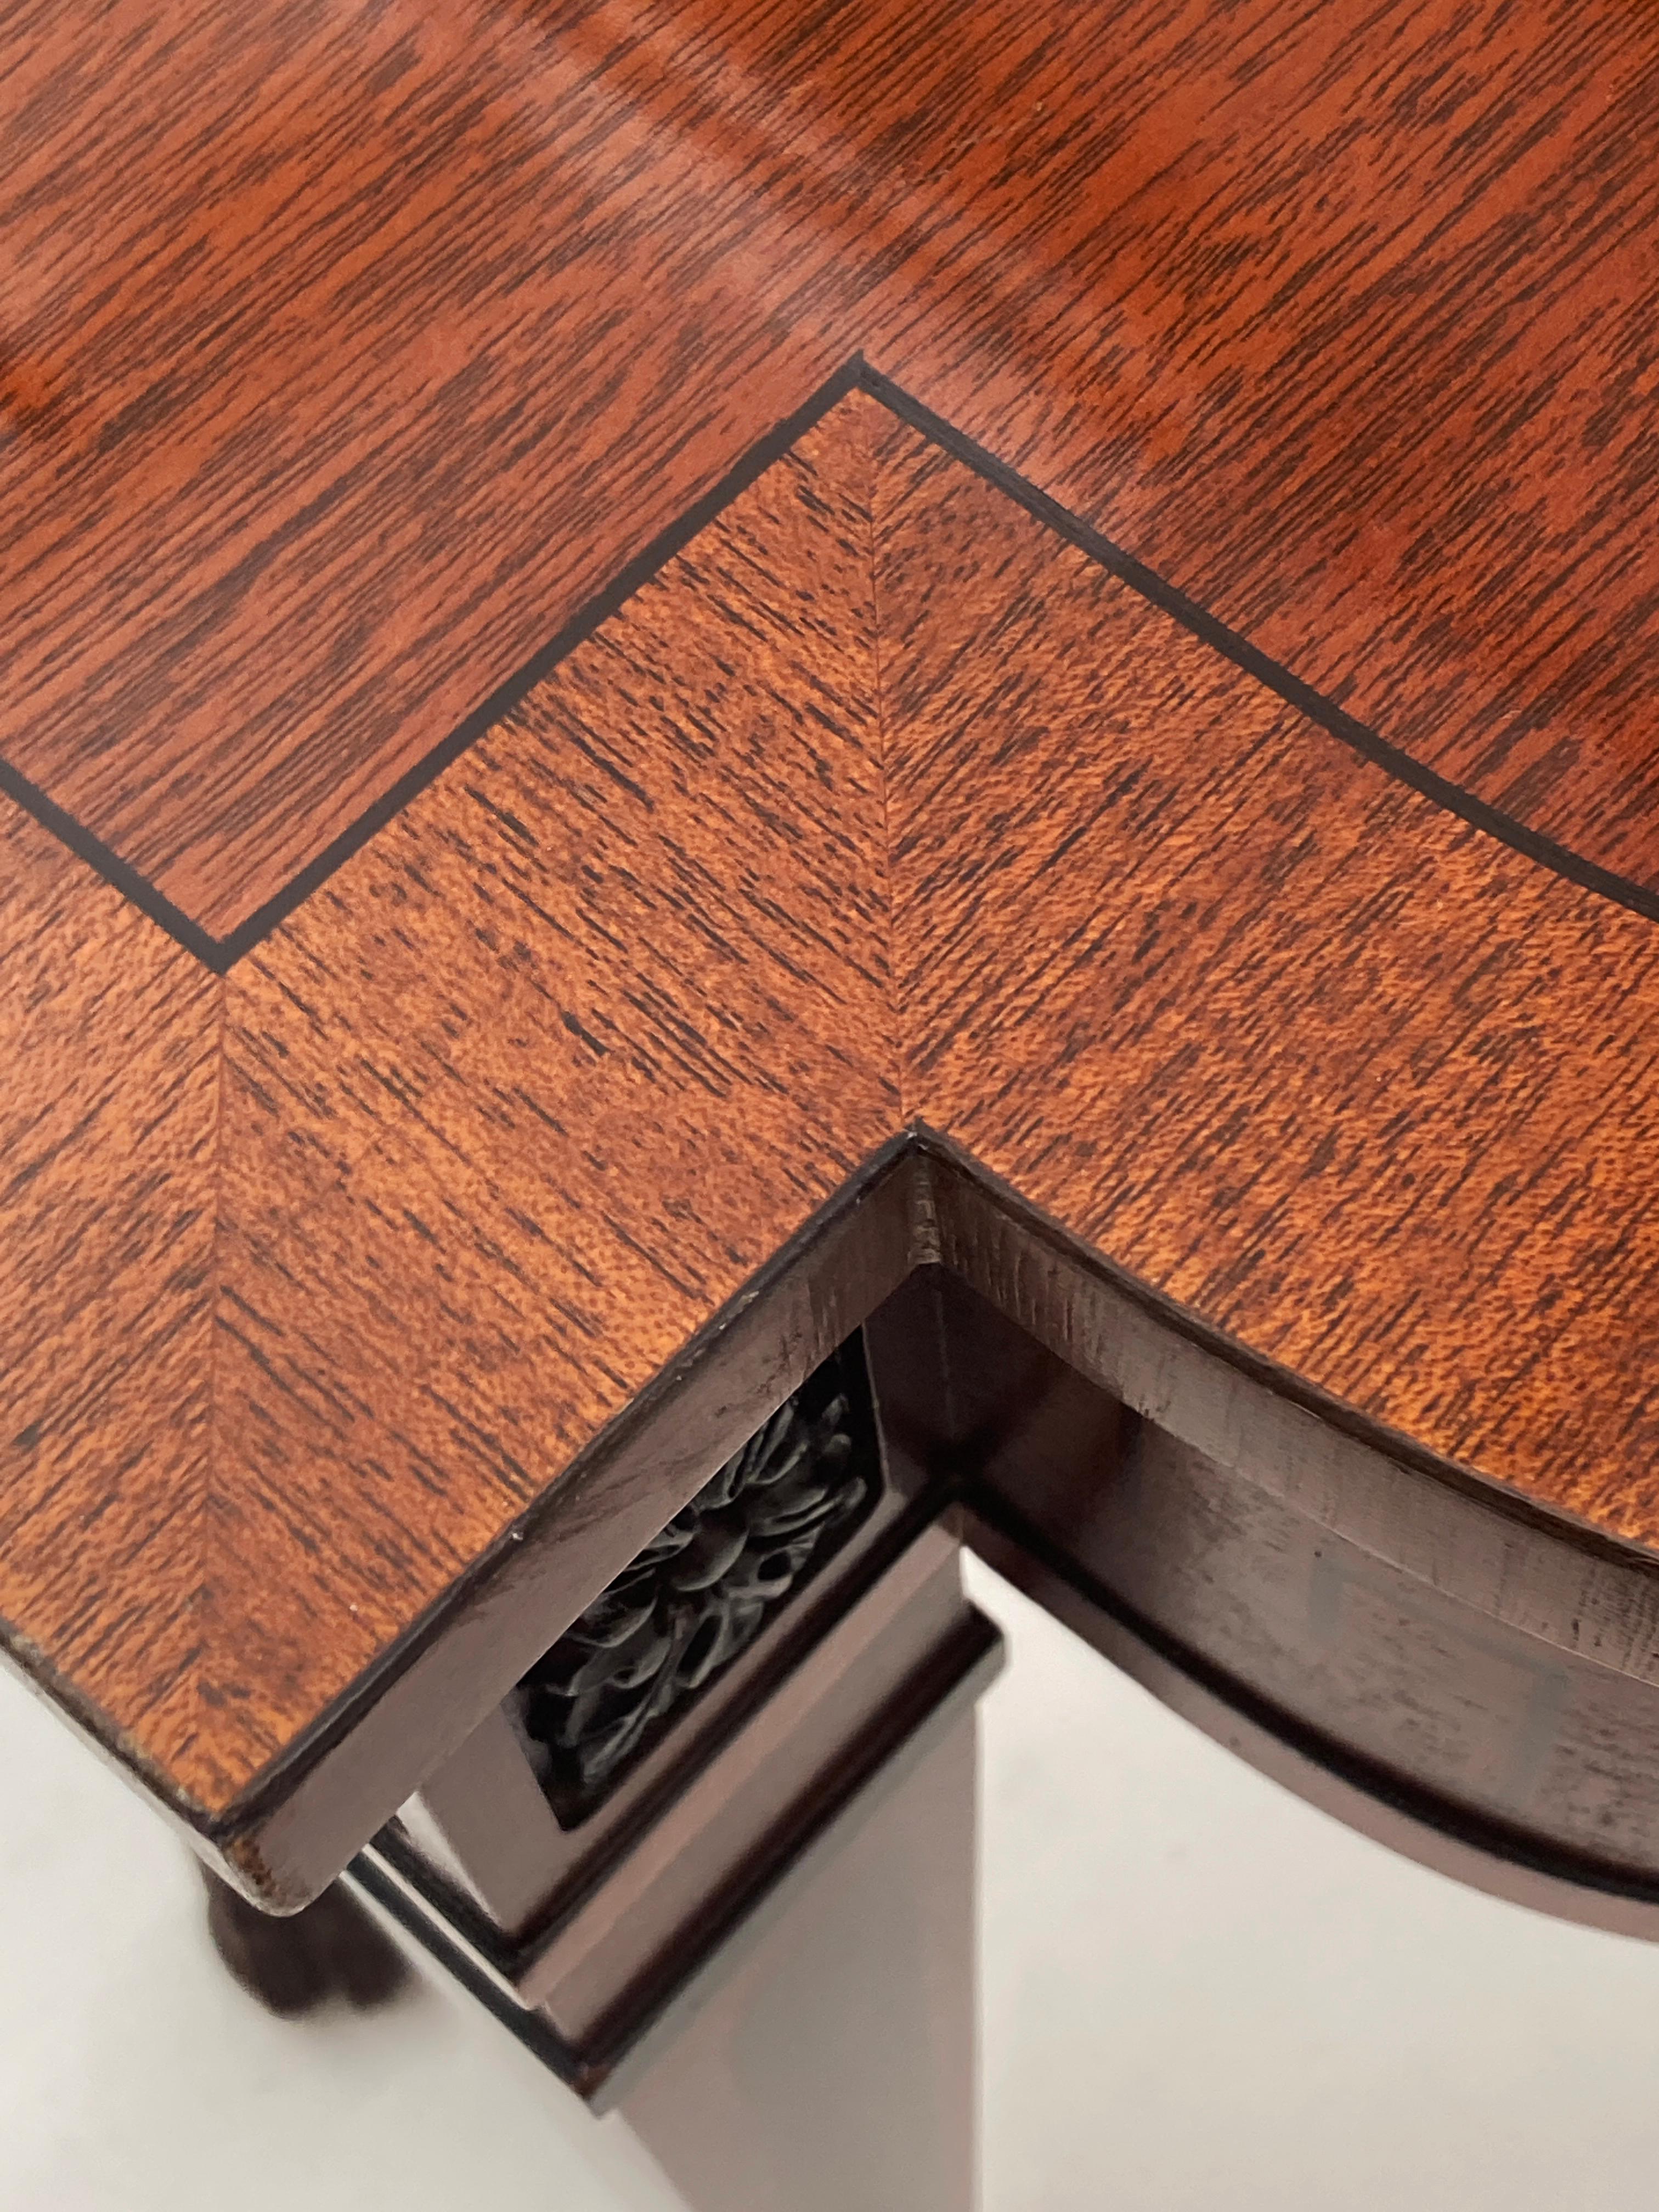 Baker Furniture Regency Mahogany Console Table with Ebonized Greek Key Inlay  For Sale 8